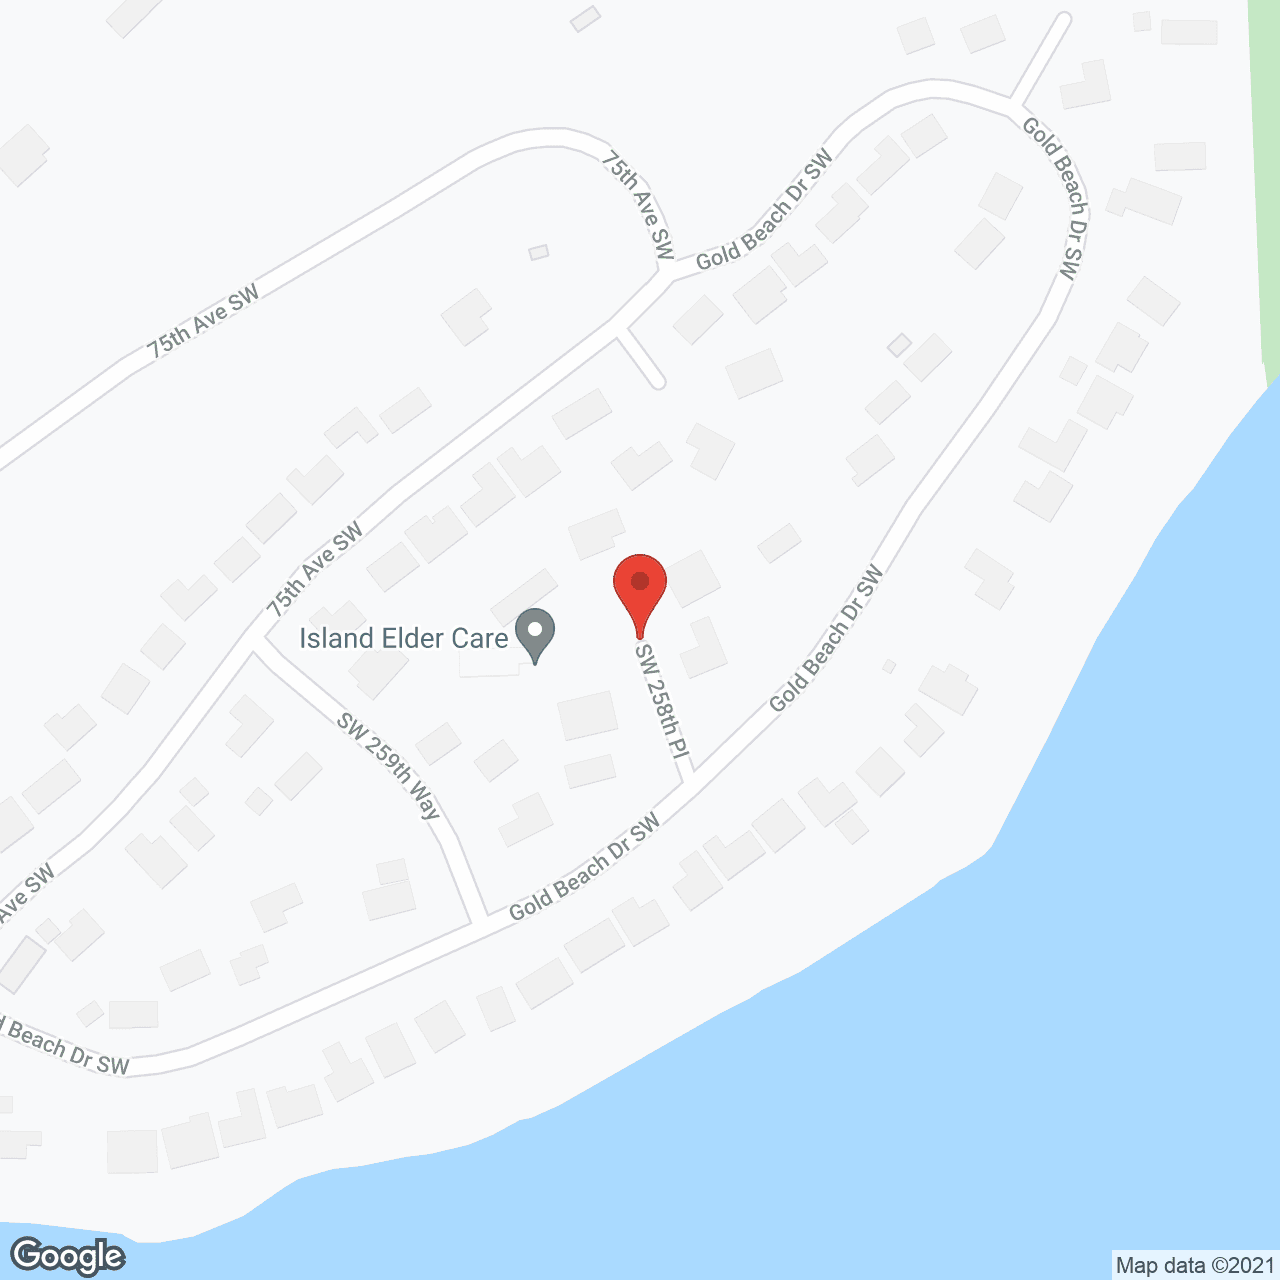 Island Elder Care in google map